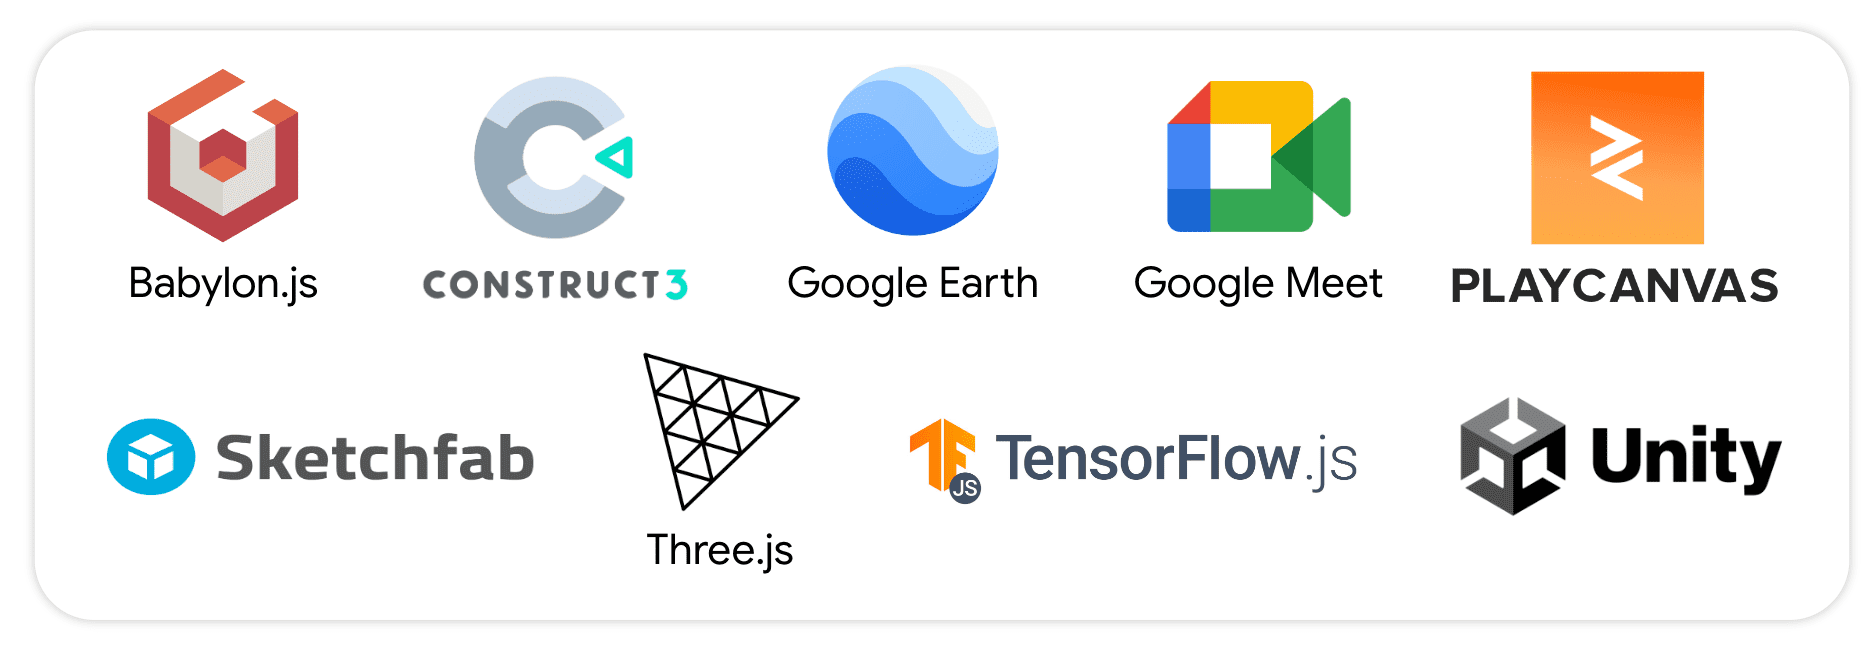 Babylon.js, Construct 3, Google Earth, Google Meet, PlayCanvas, Sketchfab, Three.JS, TensorFlow.js en Unity.